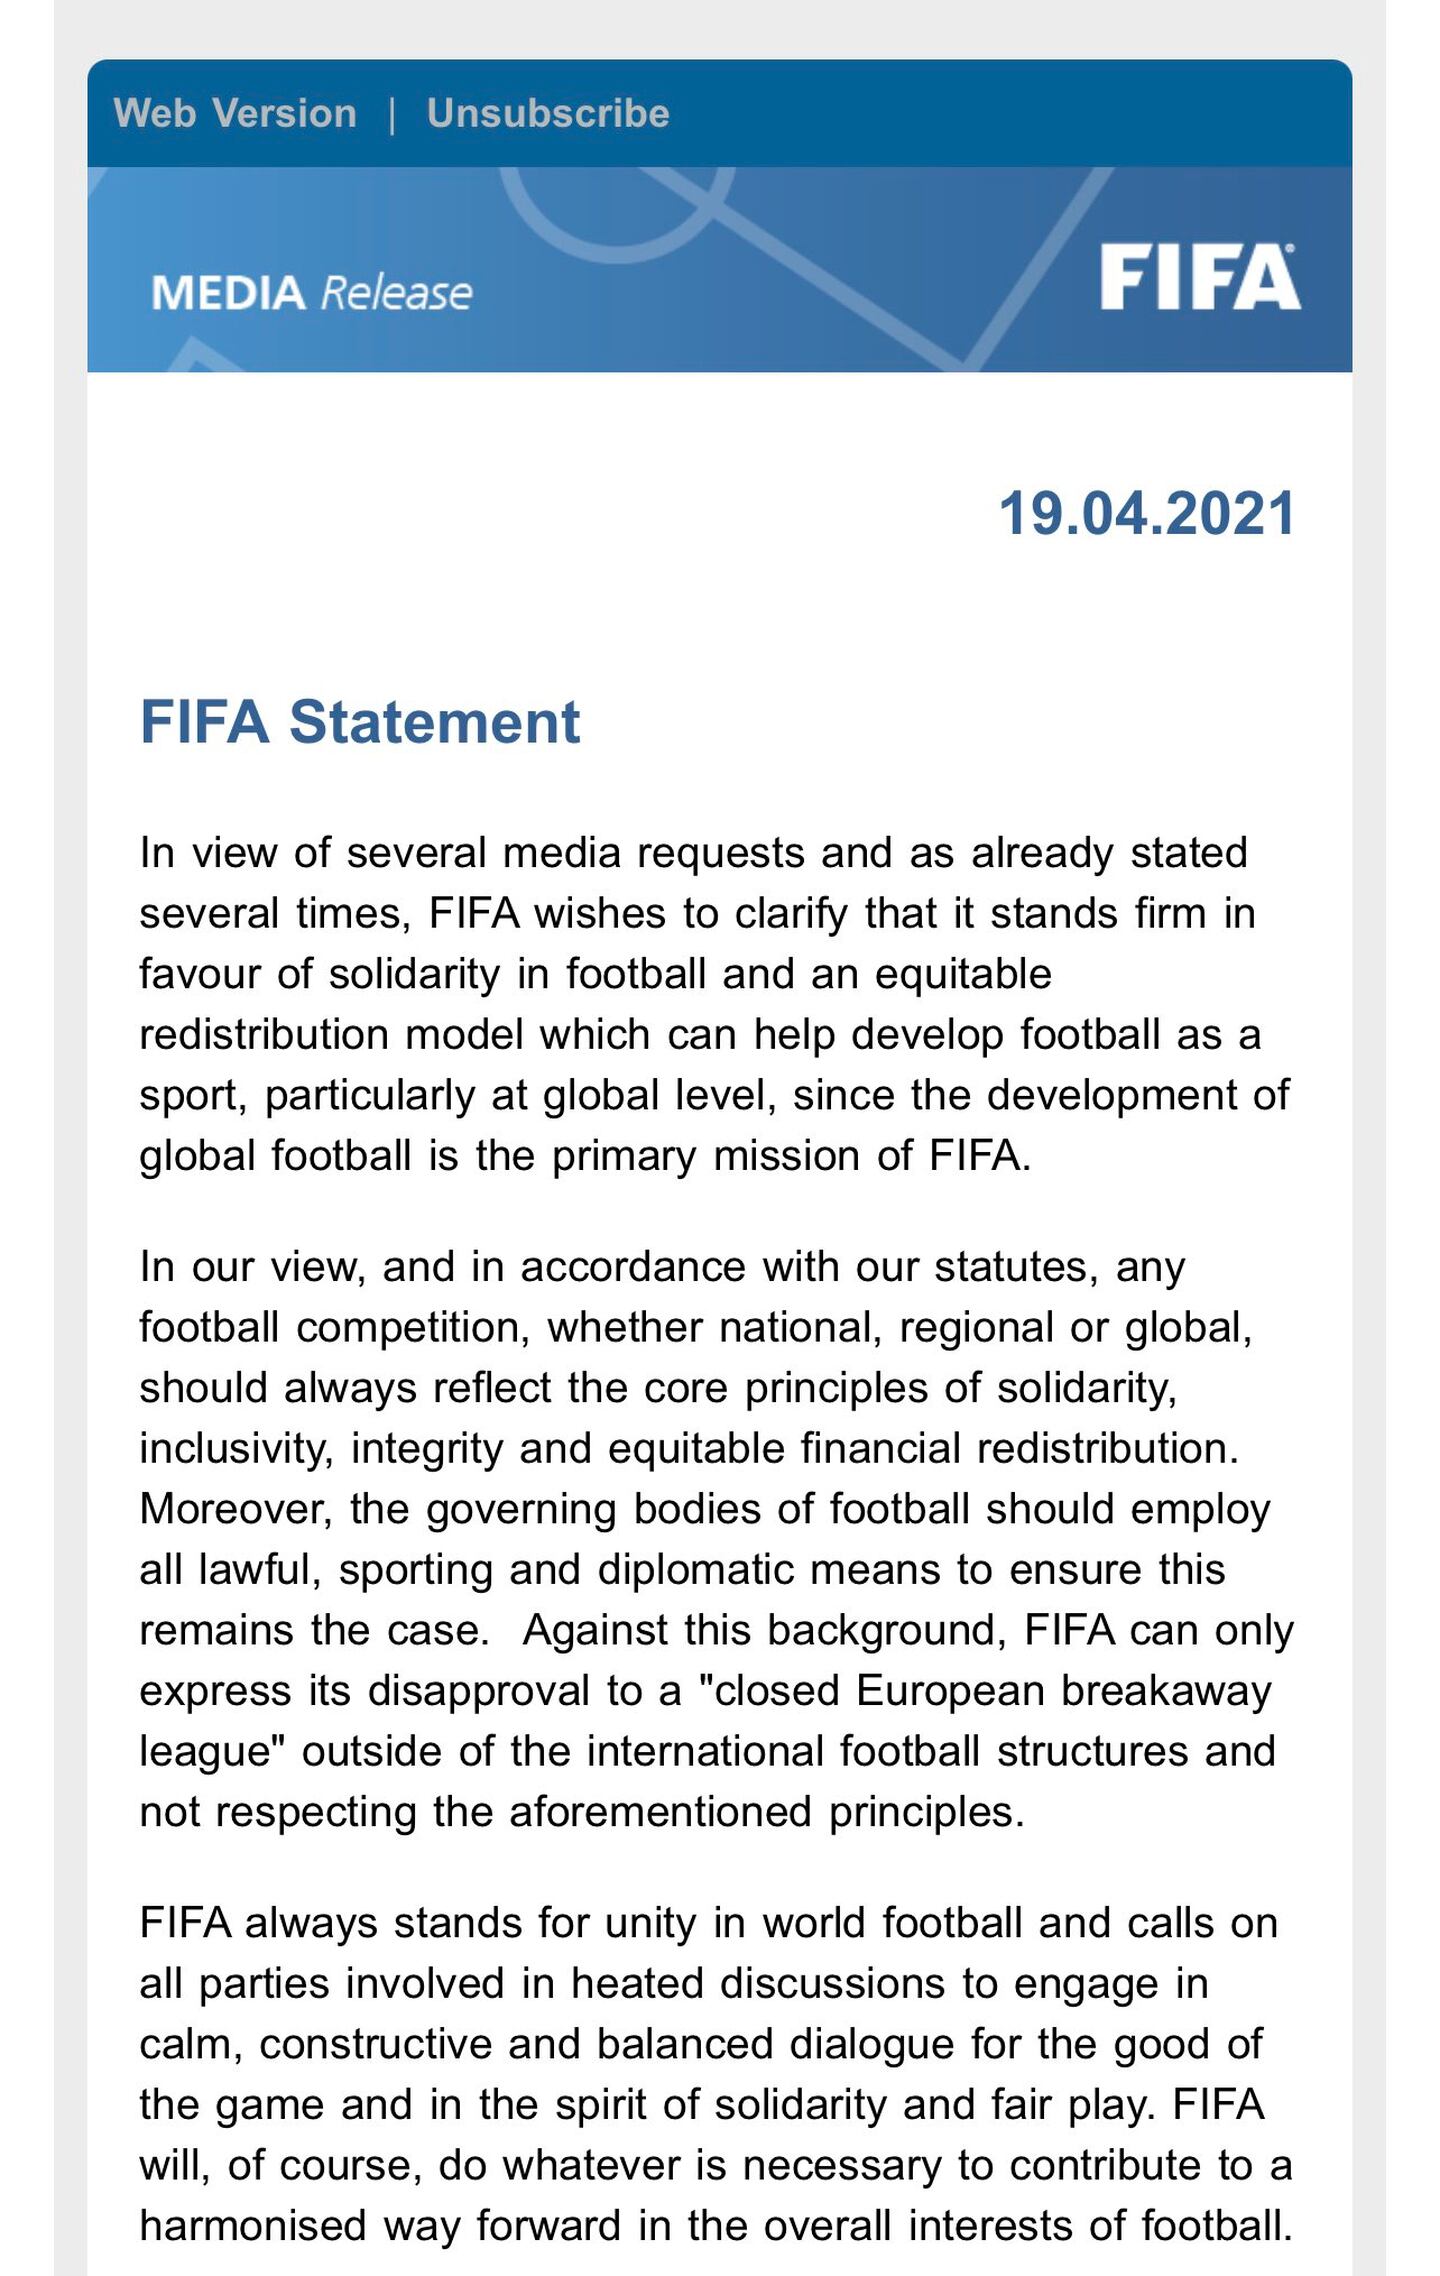 La tajante postura de UEFA y FIFA ante la nueva Superliga Europea